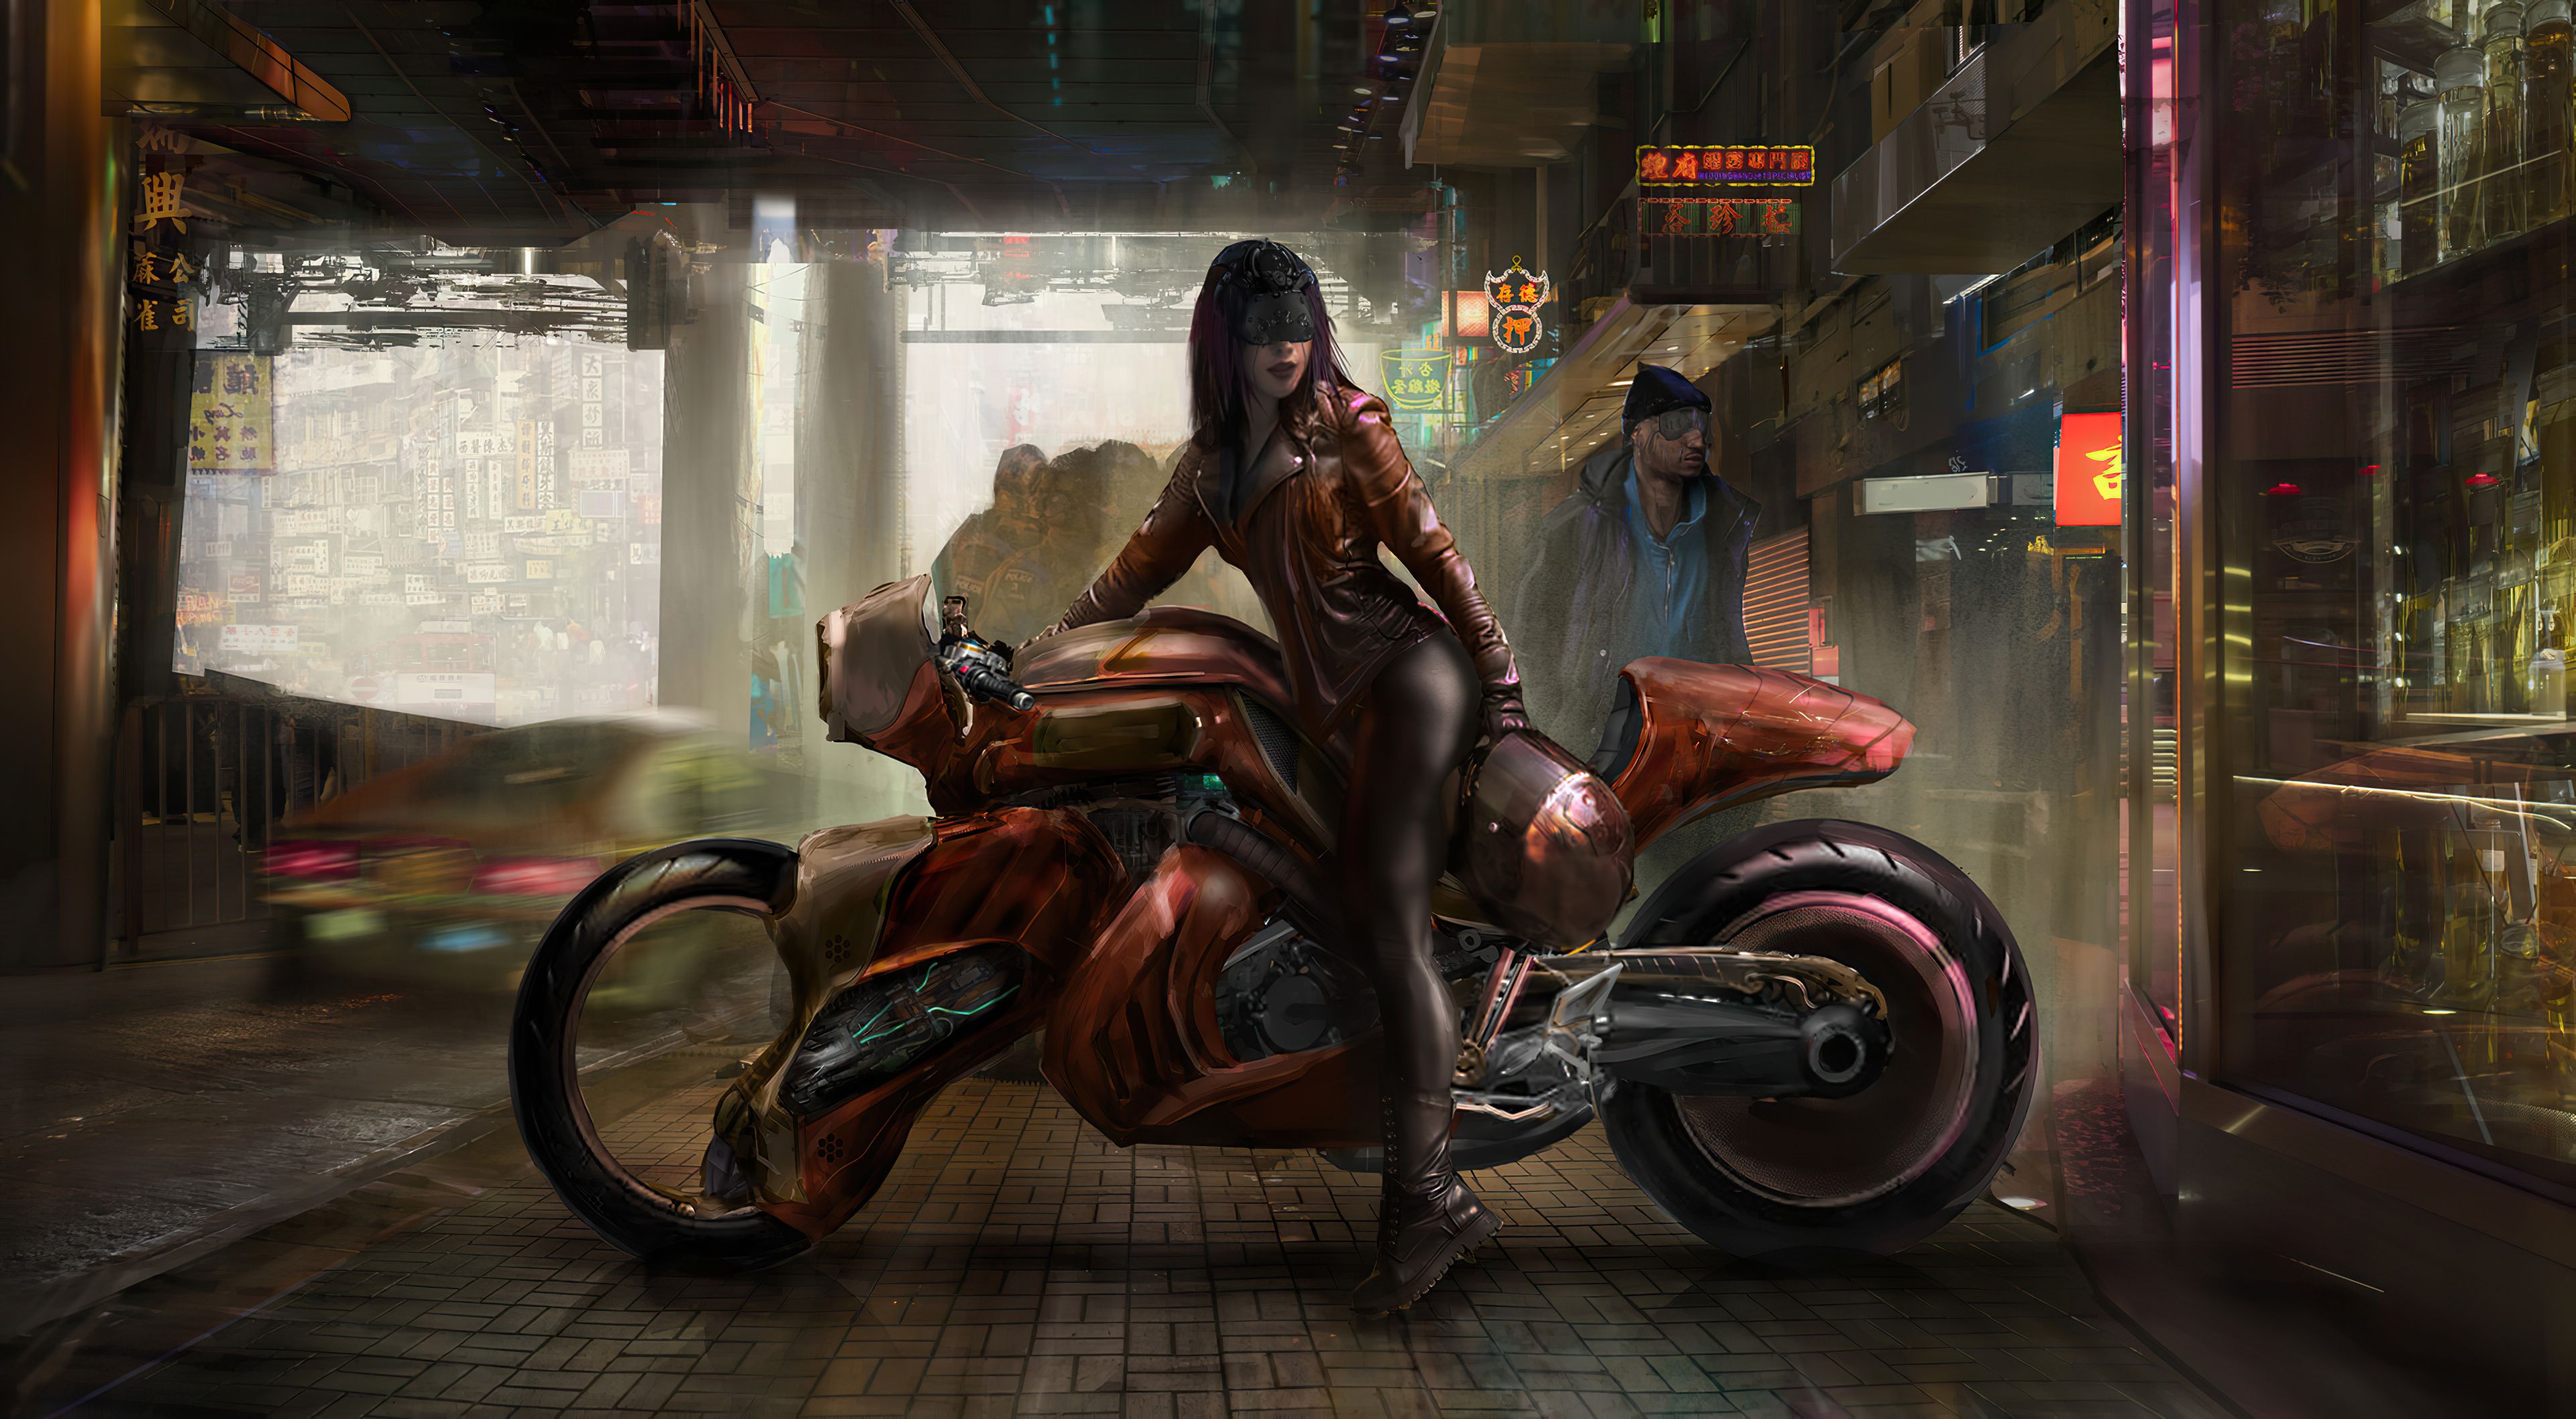 Cyberpunk Girl Futuristic Motorcycle Wallpaper, HD Fantasy 4K